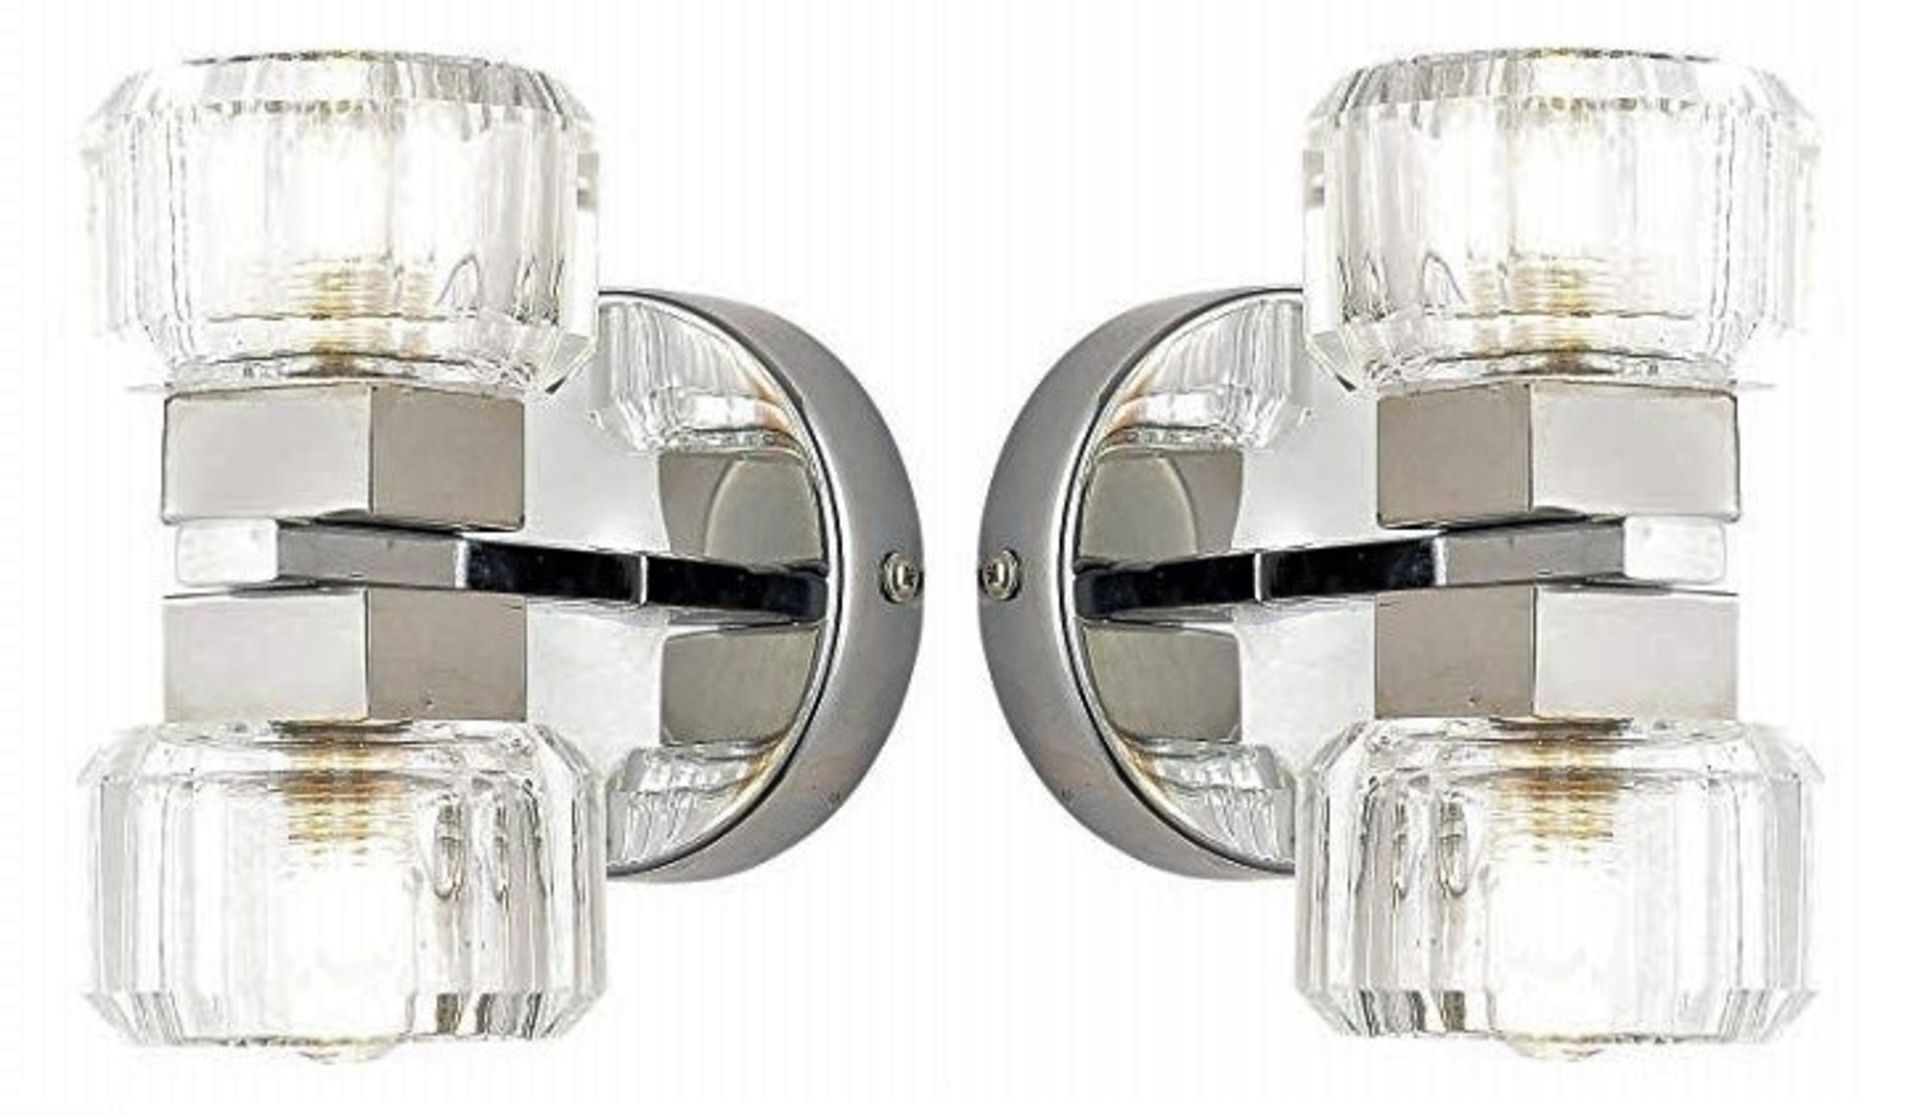 2 x Spa Bathroom Lighting Octan Twin Light Wall Lights - Chrome With Glass Shades - Product Code